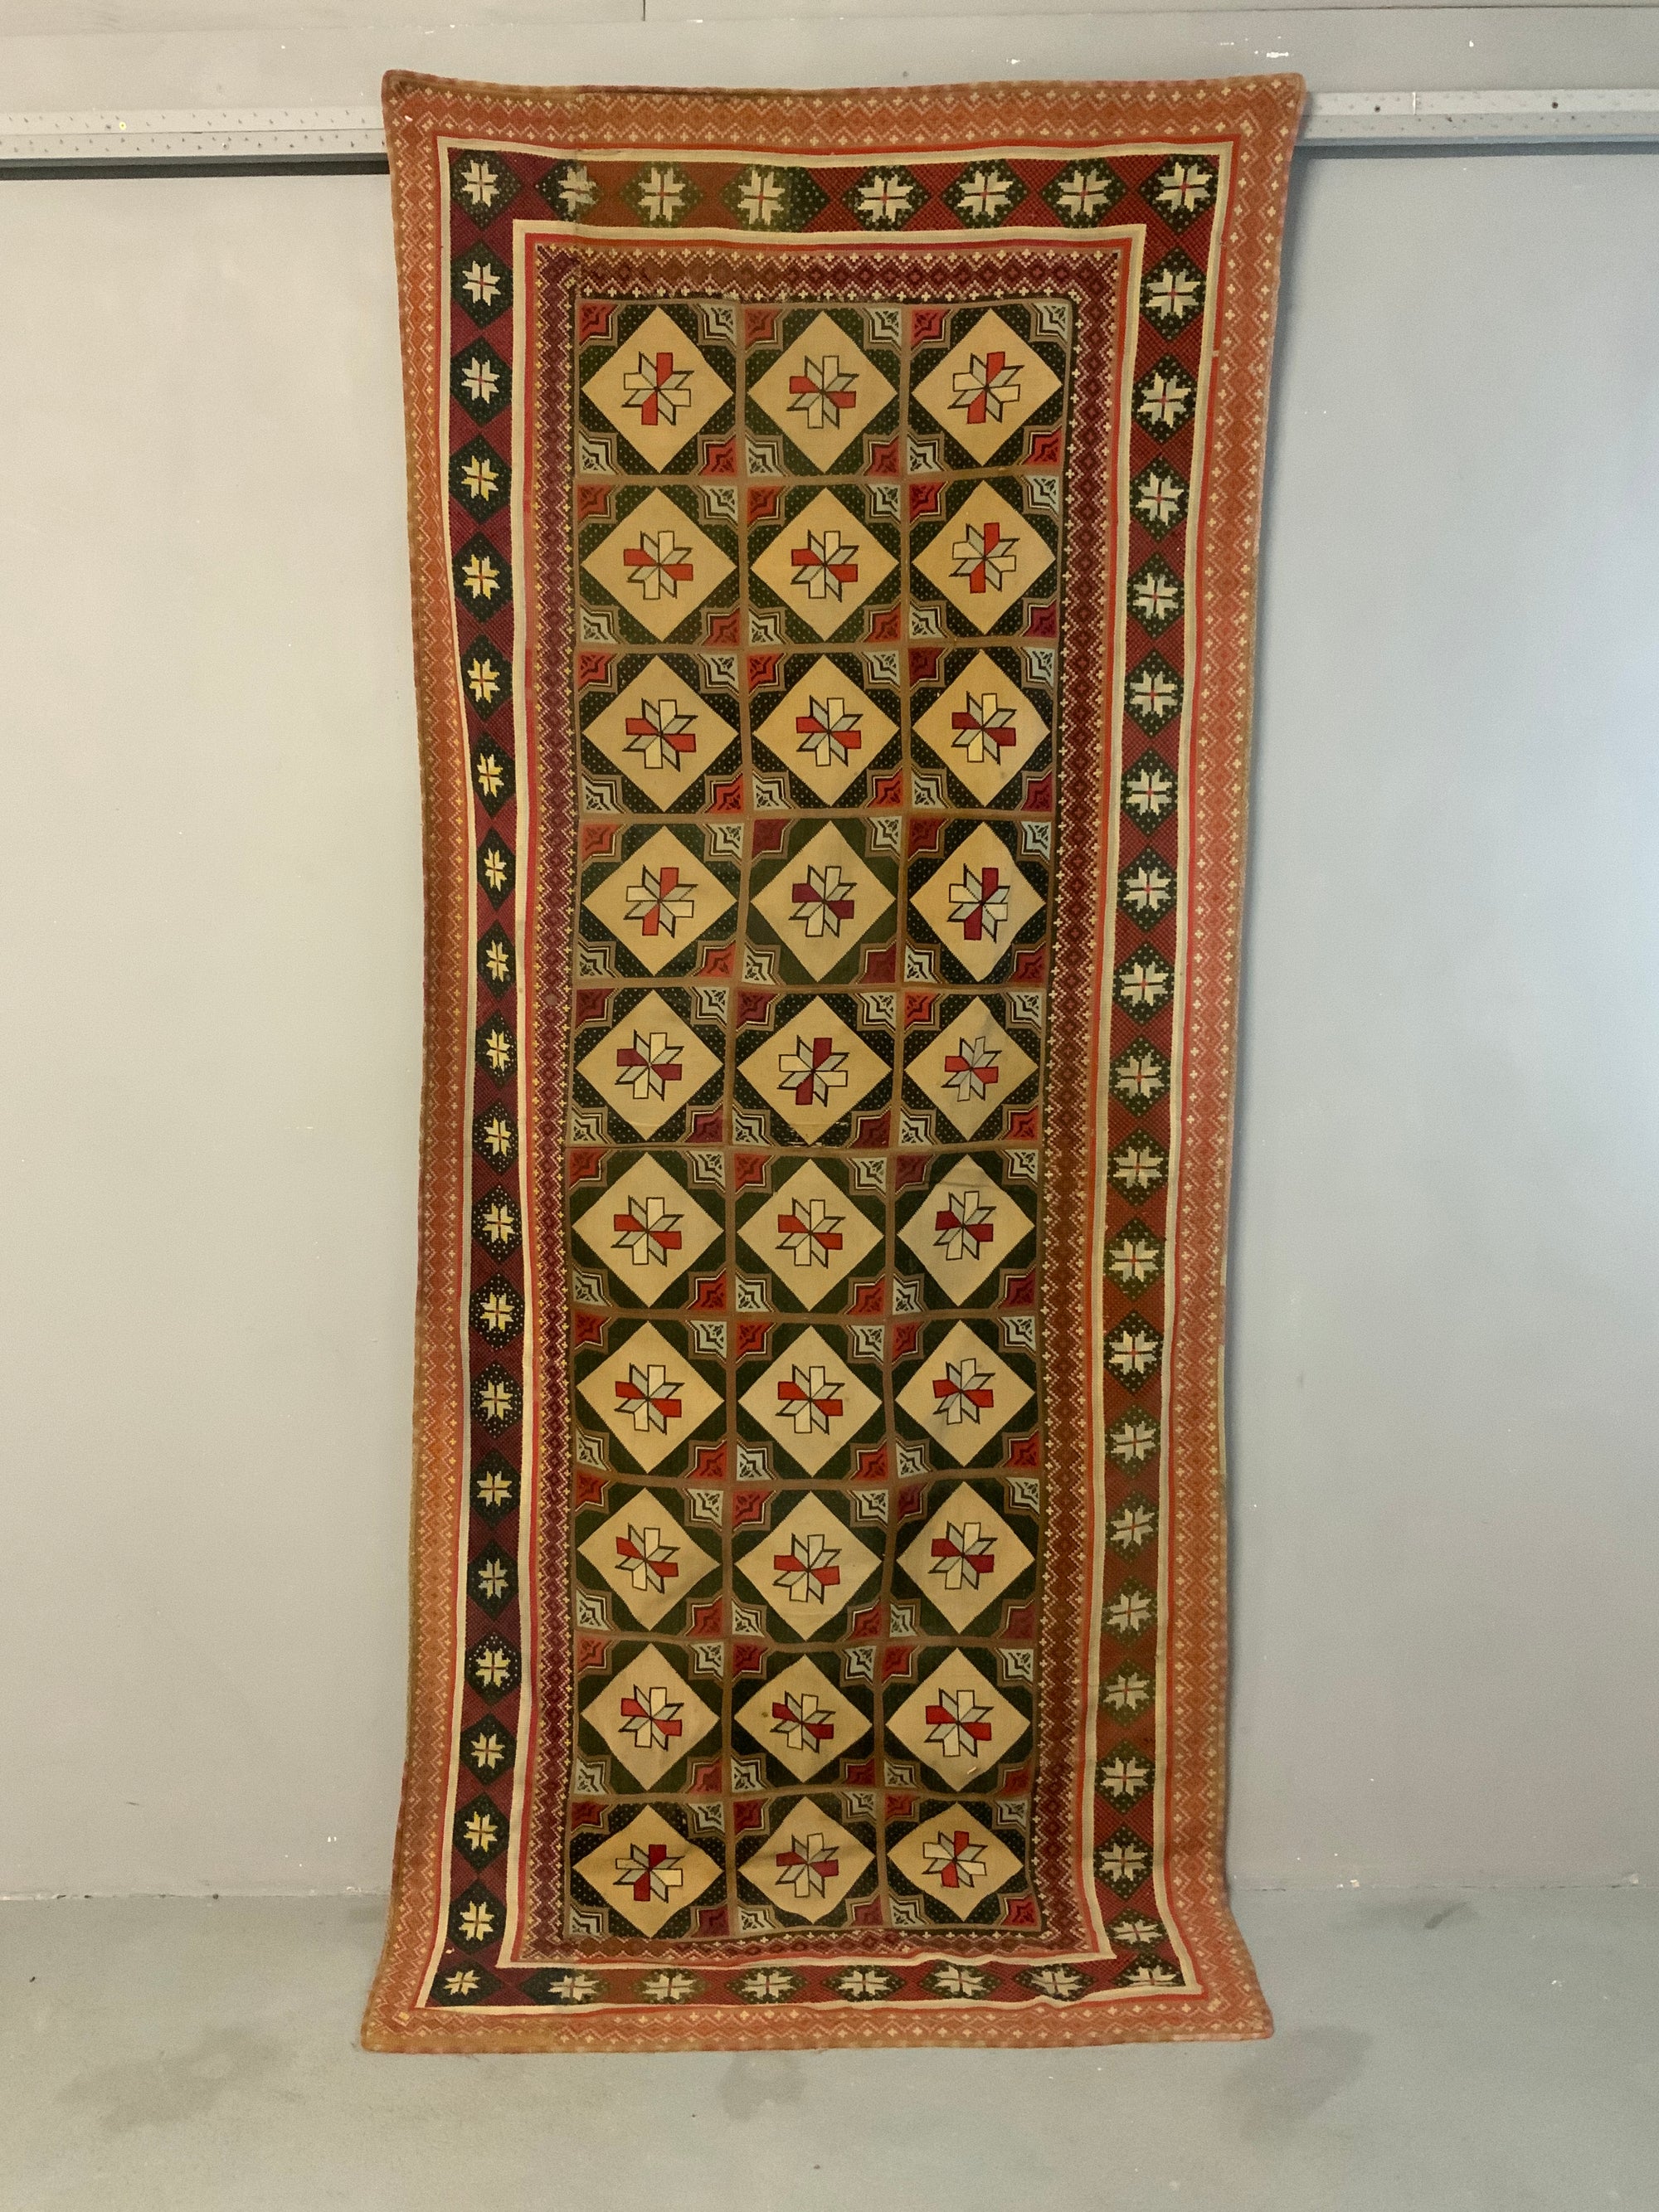 French needlepoint rug (263 x 114cm)